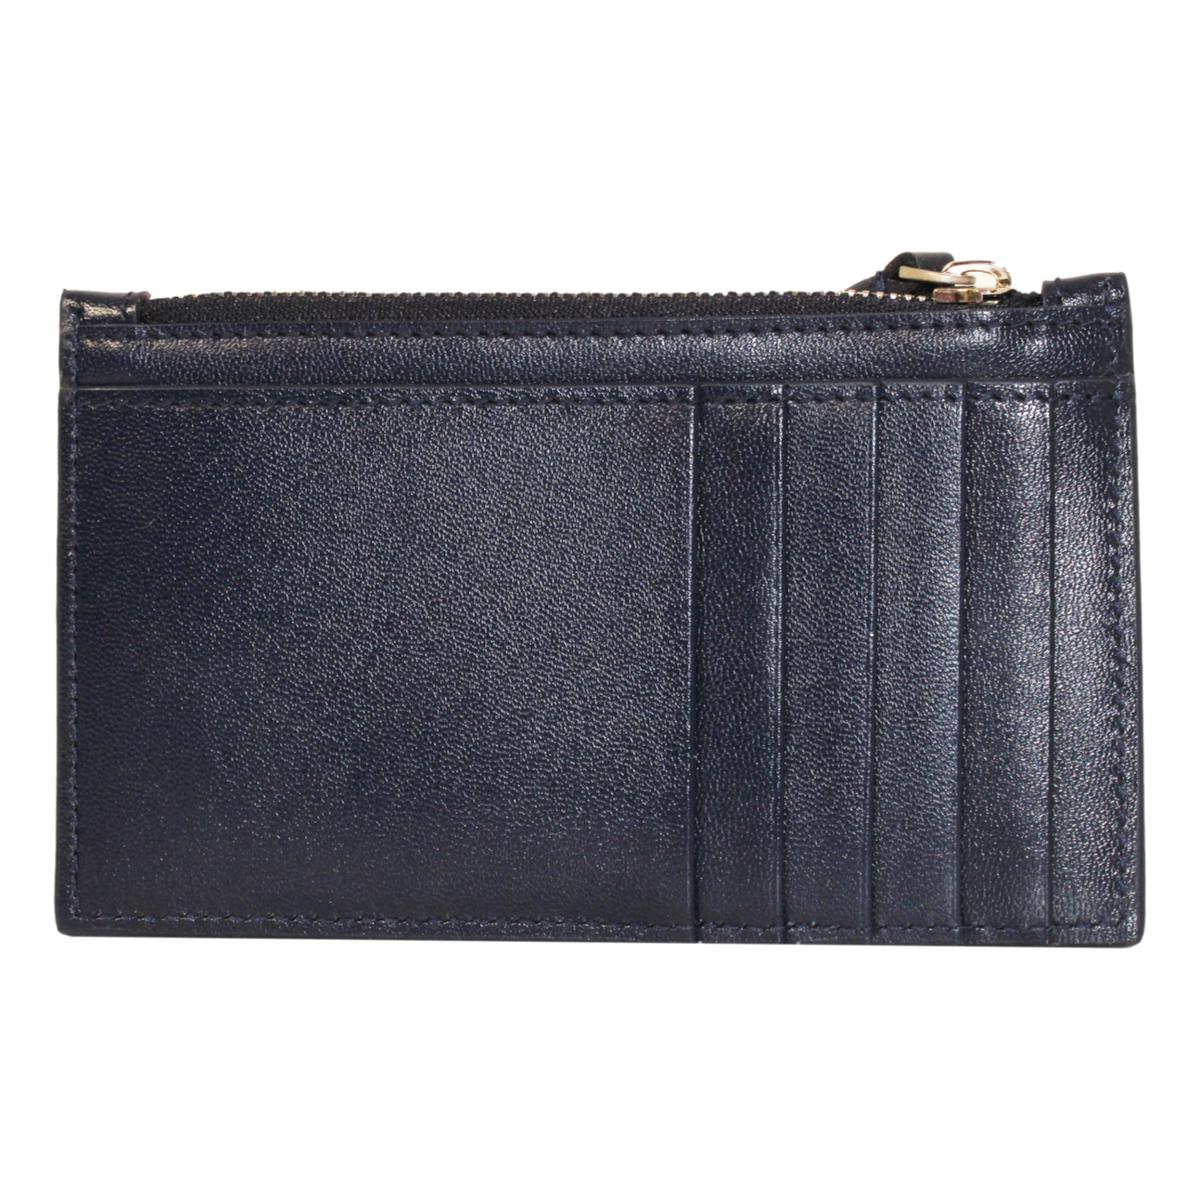 Balenciaga Cash Navy Leather Large Coin Card Holder Wallet 594311 - LUXURYMRKT